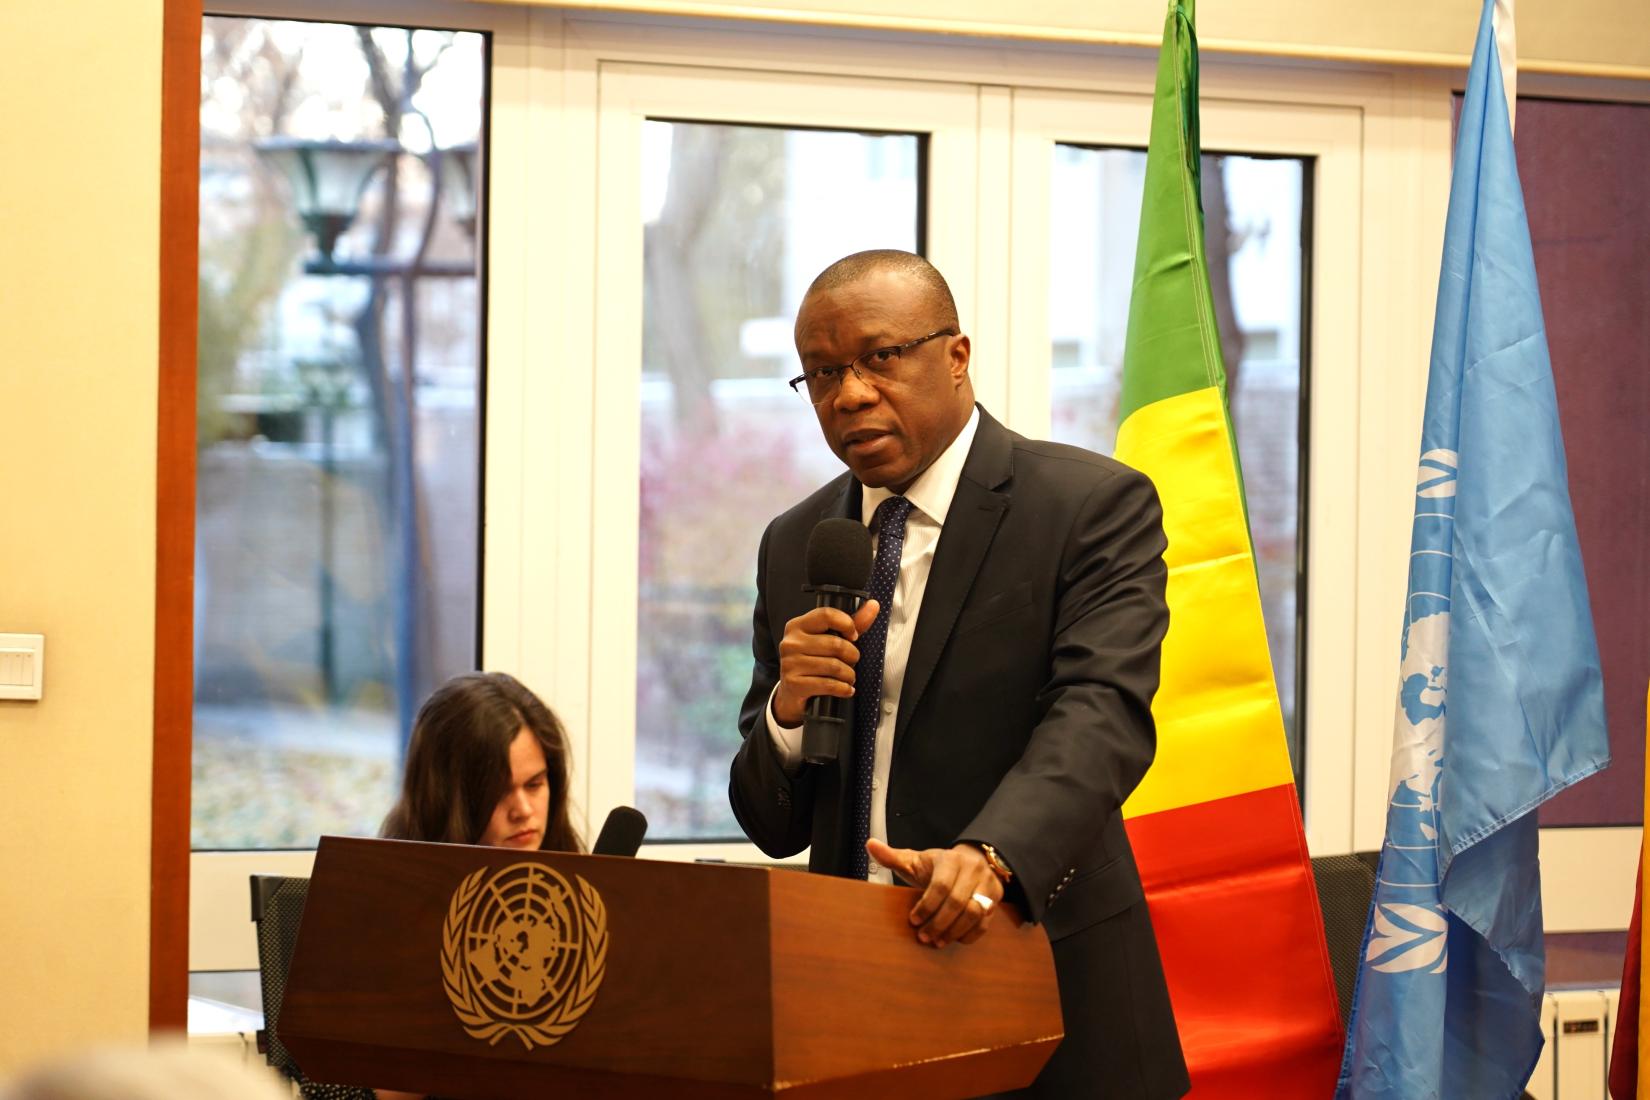 His Excellency Mr. Ibragima Sory Sylla, Ambassador of Senegal to China